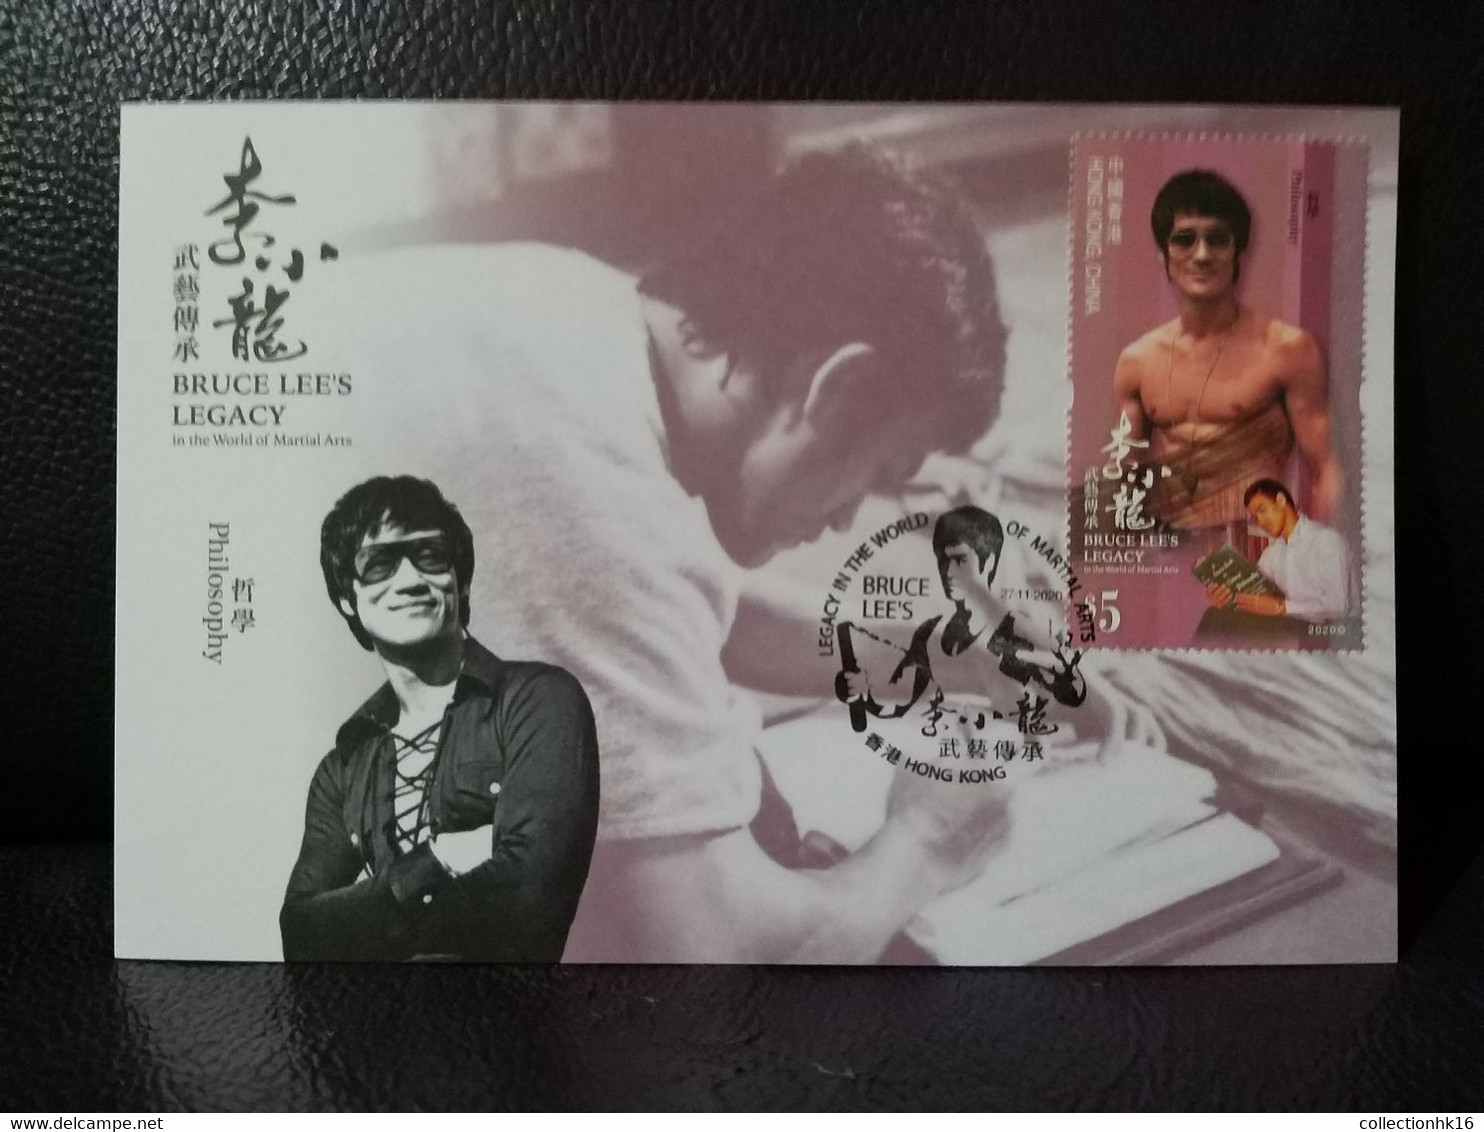 Super Star Bruce Lee Kung Fu Martial Art Hong Kong Maximum card MC Postcard Set (Pictorial Postmark) (6 cards)